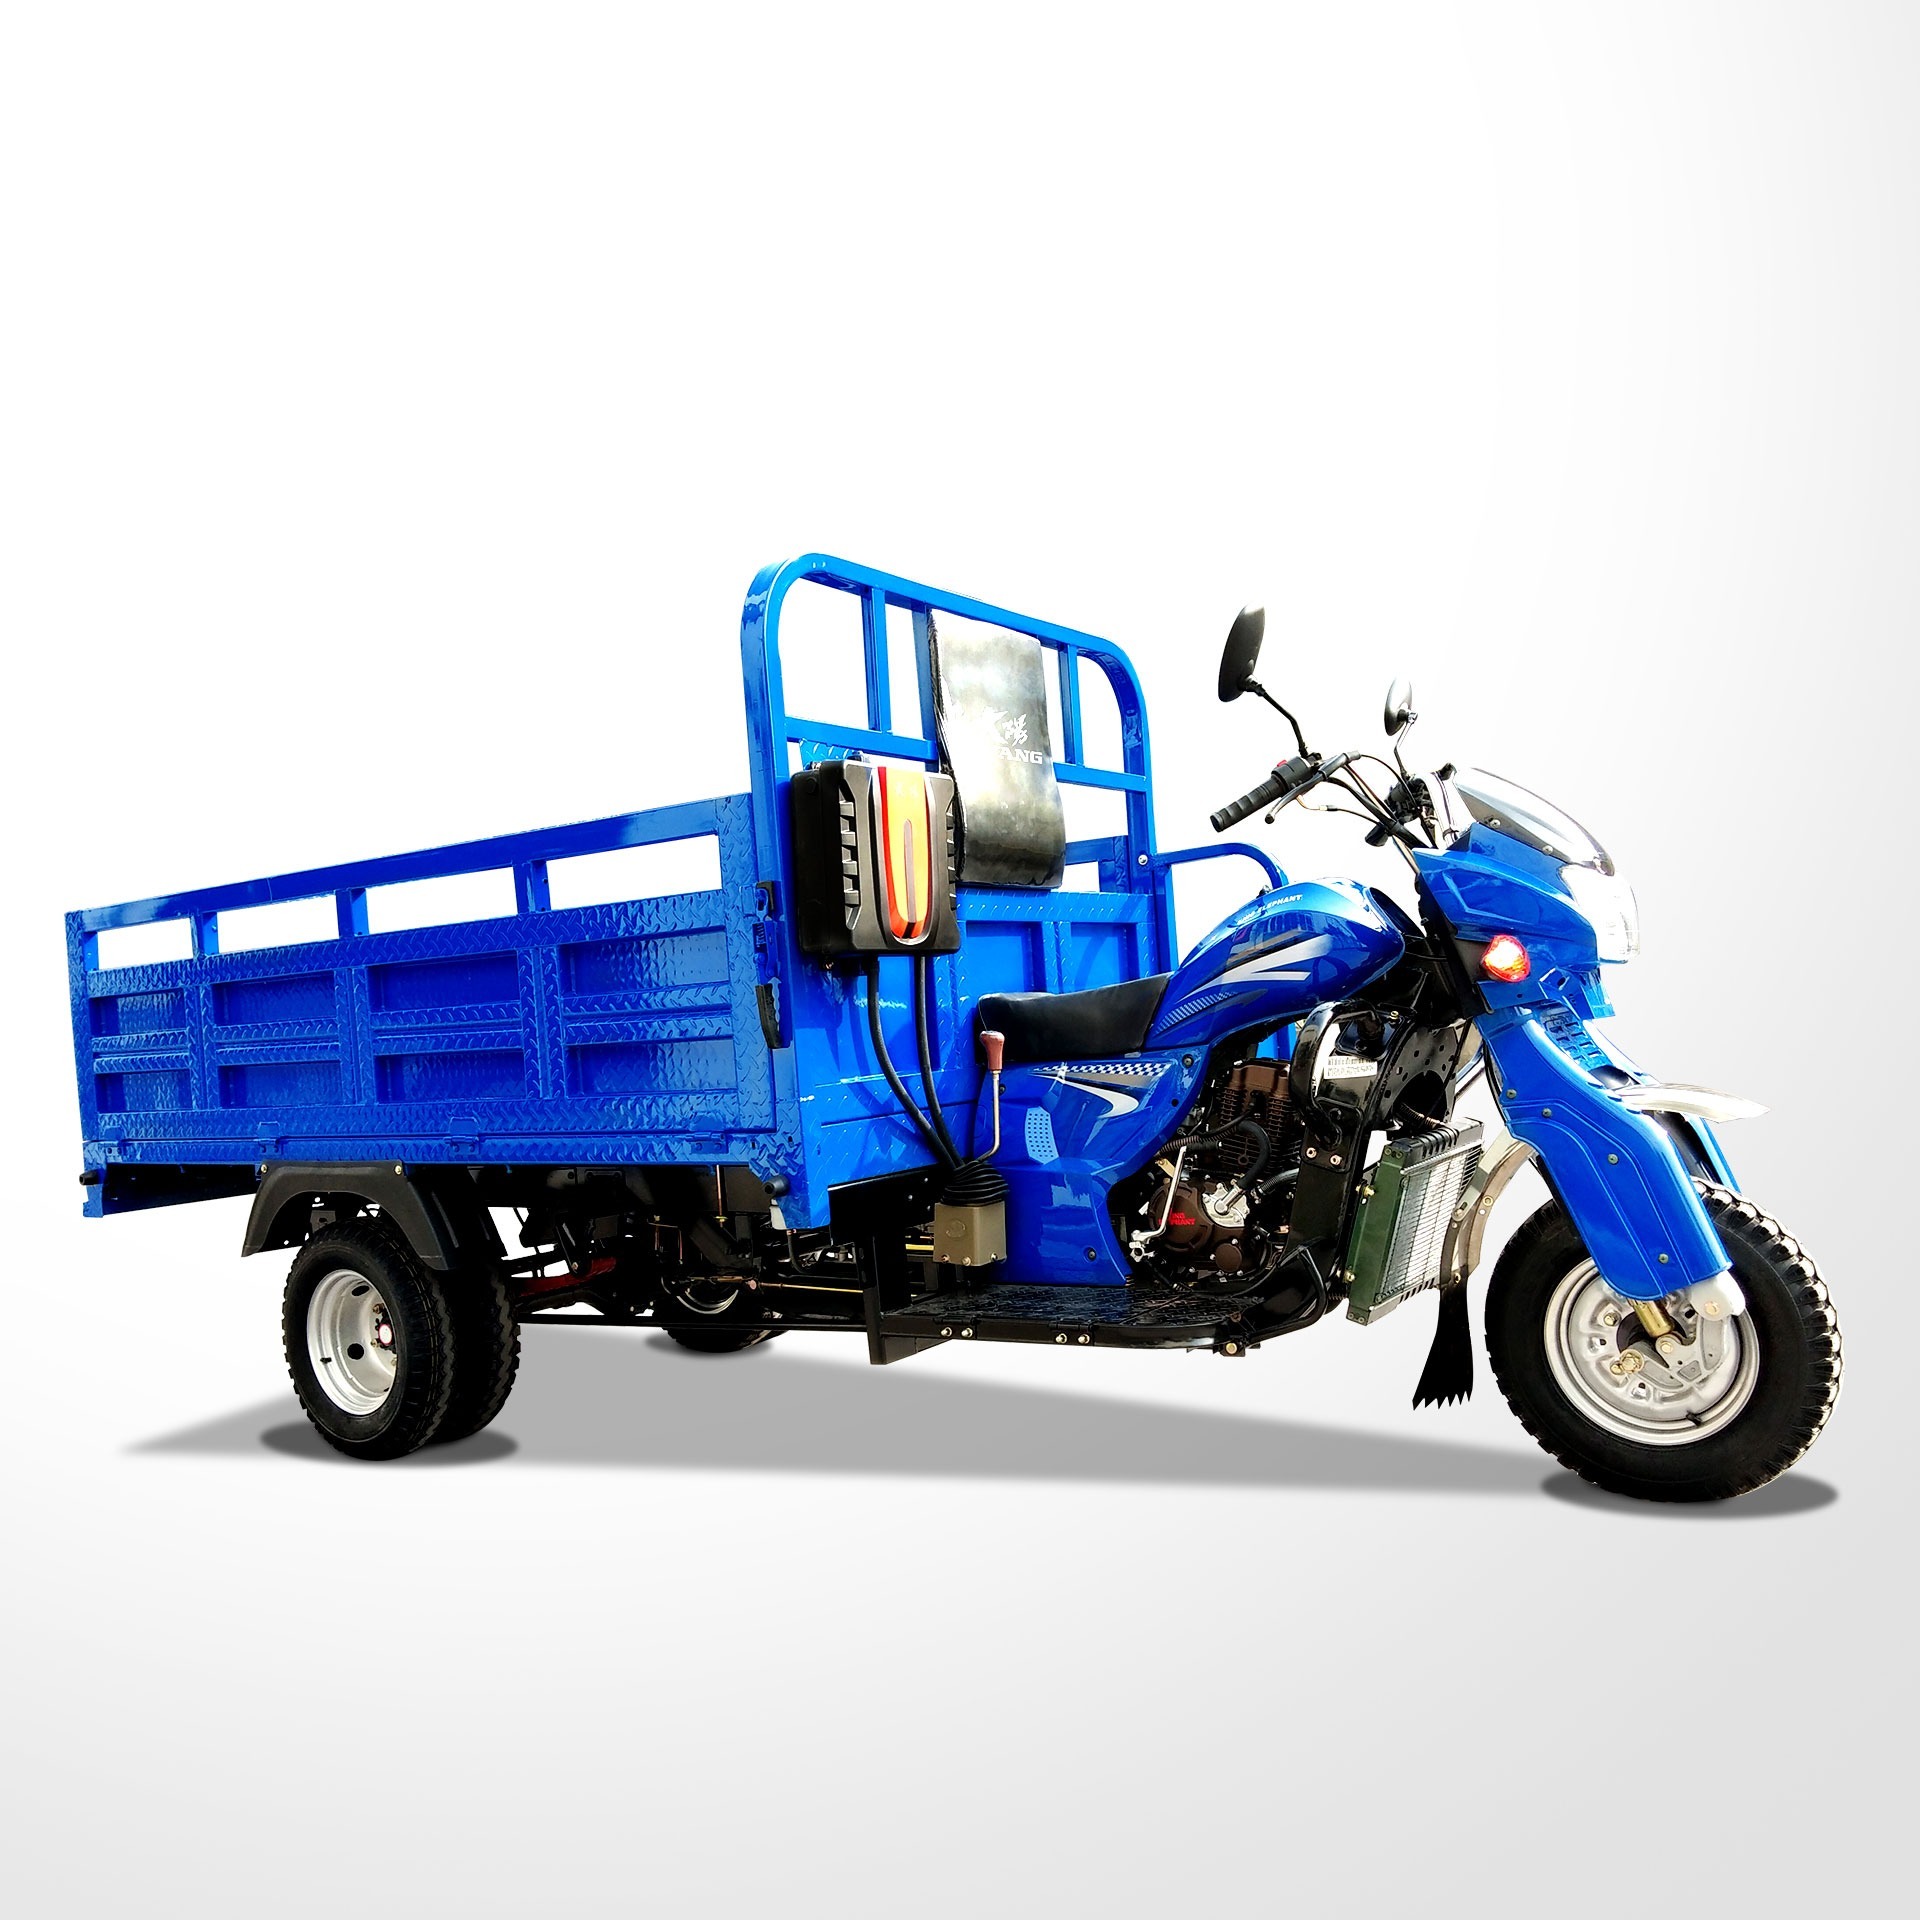 DY-M1A 4 Stroke Single Cylinder 250CC 3 Wheel Cargo Motorcycle